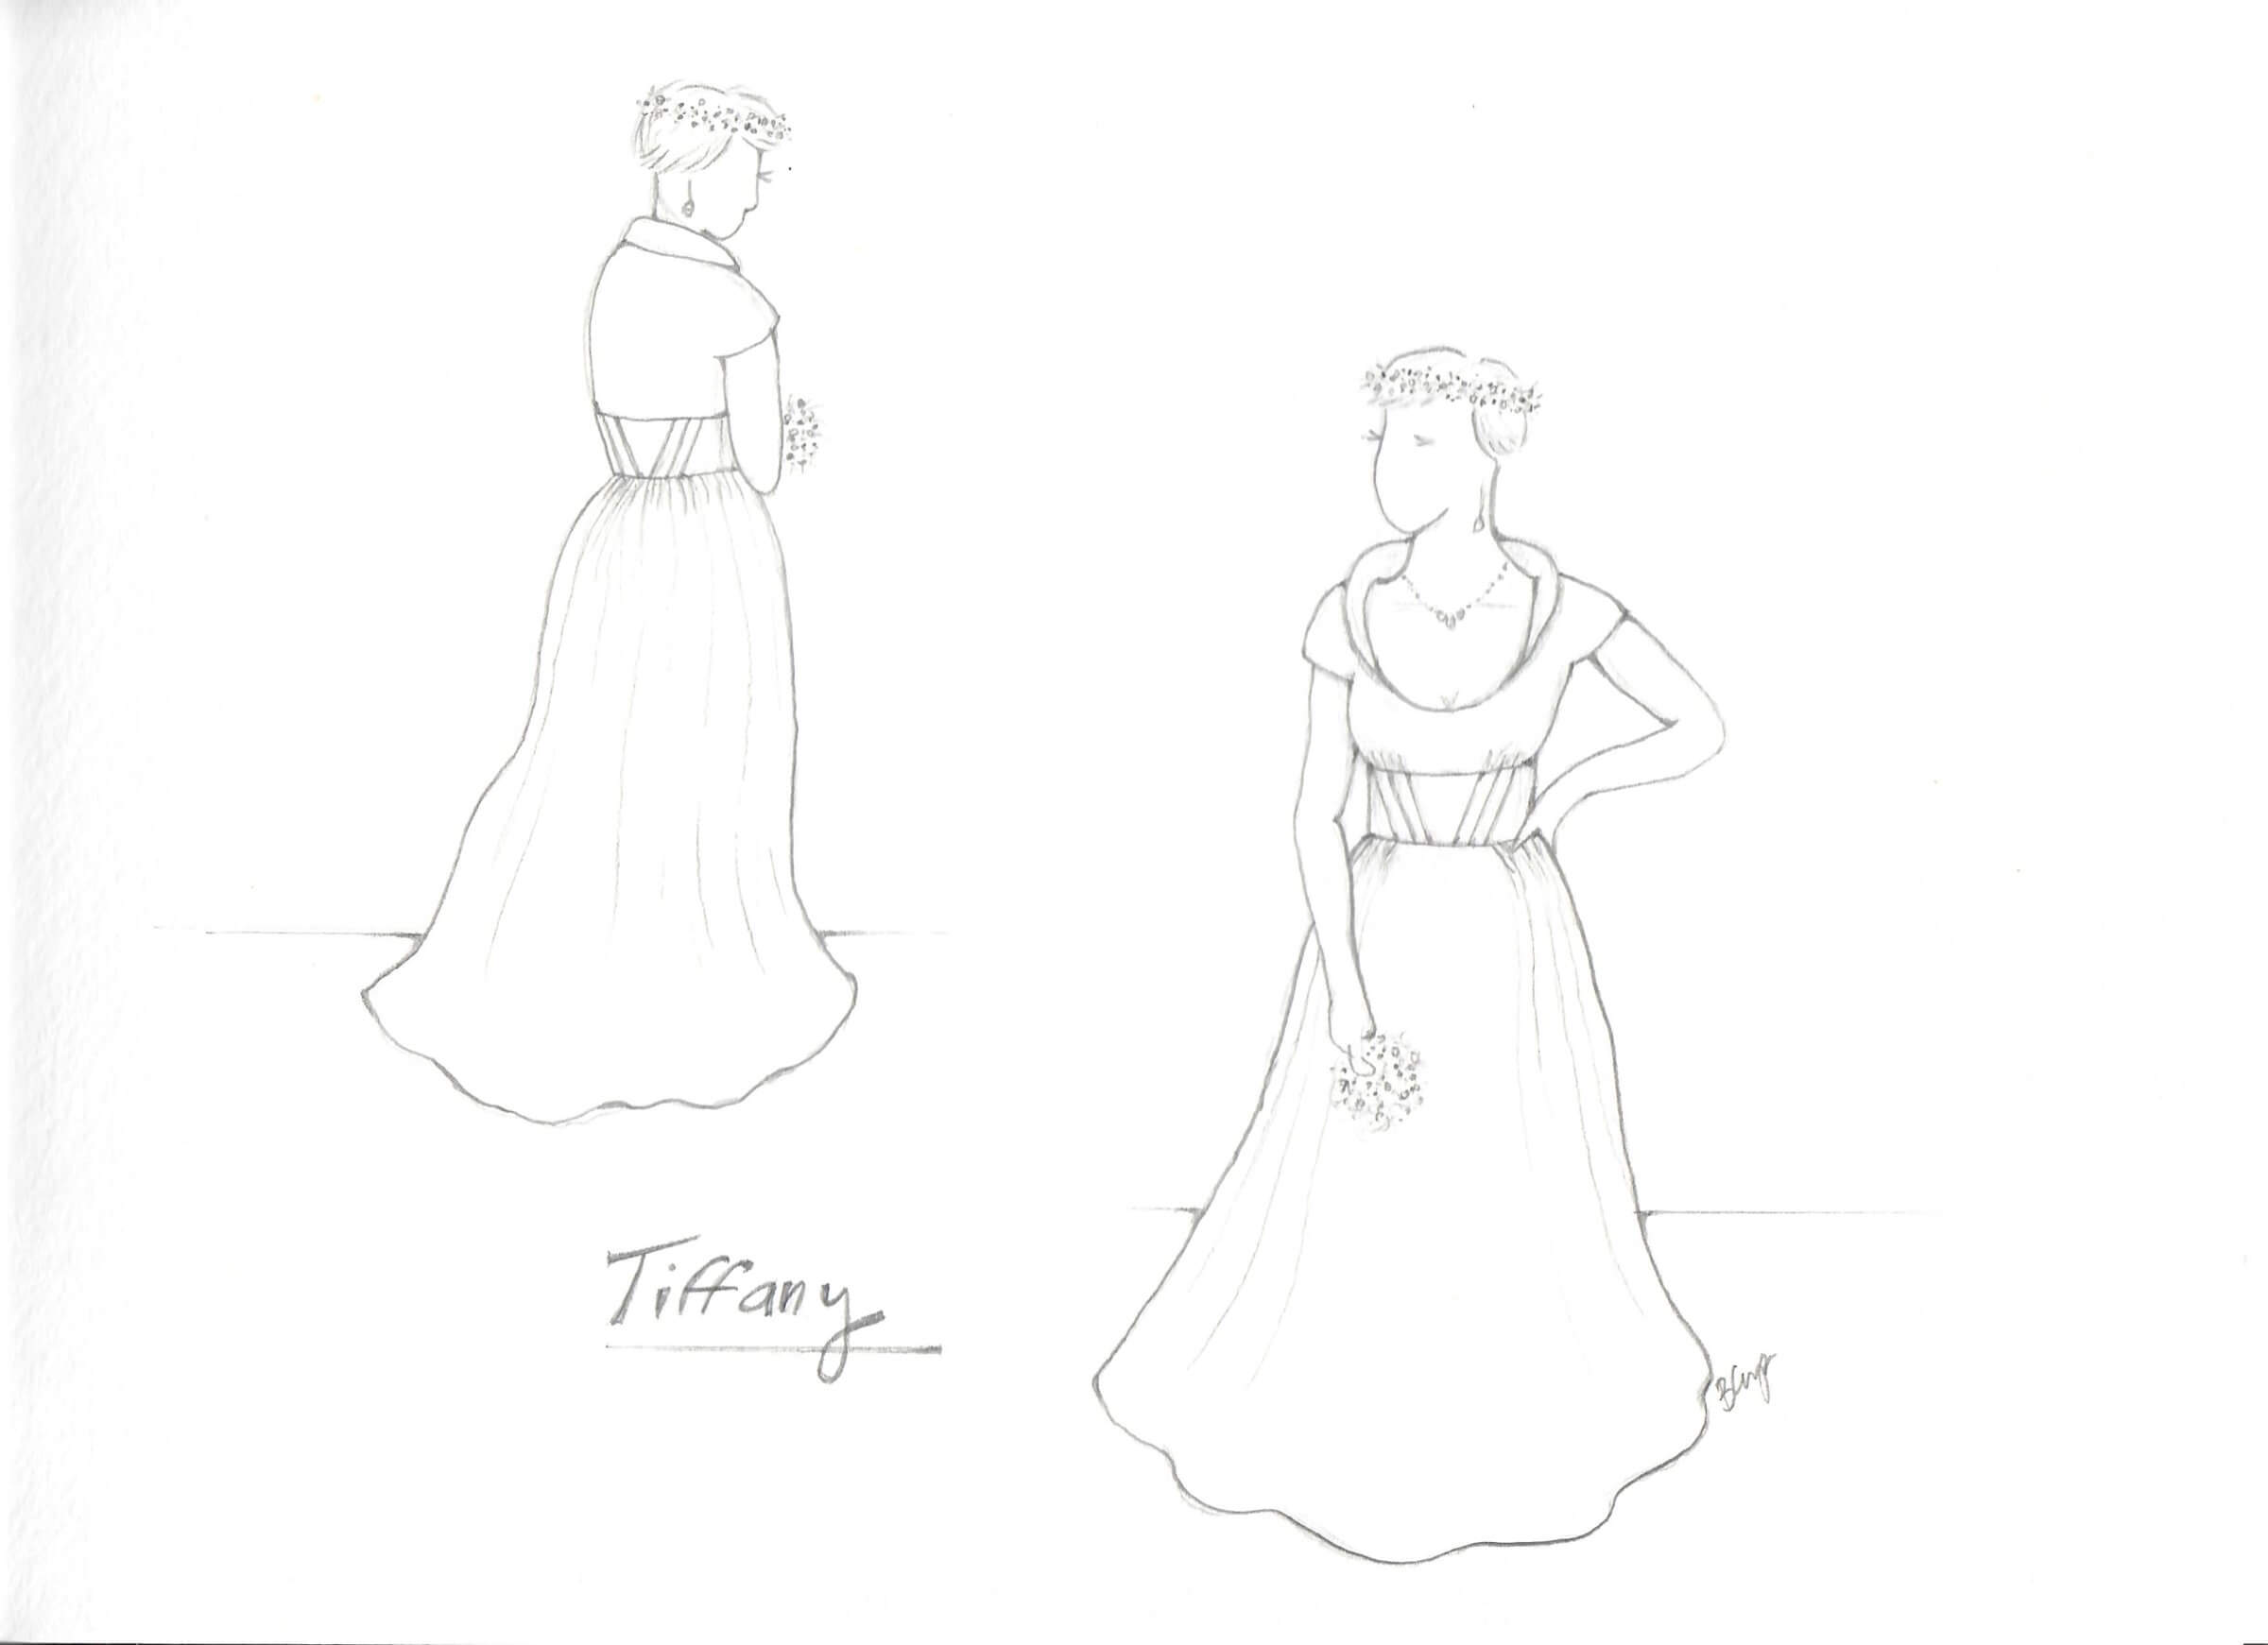 Tiffany Final Sketch copy 2